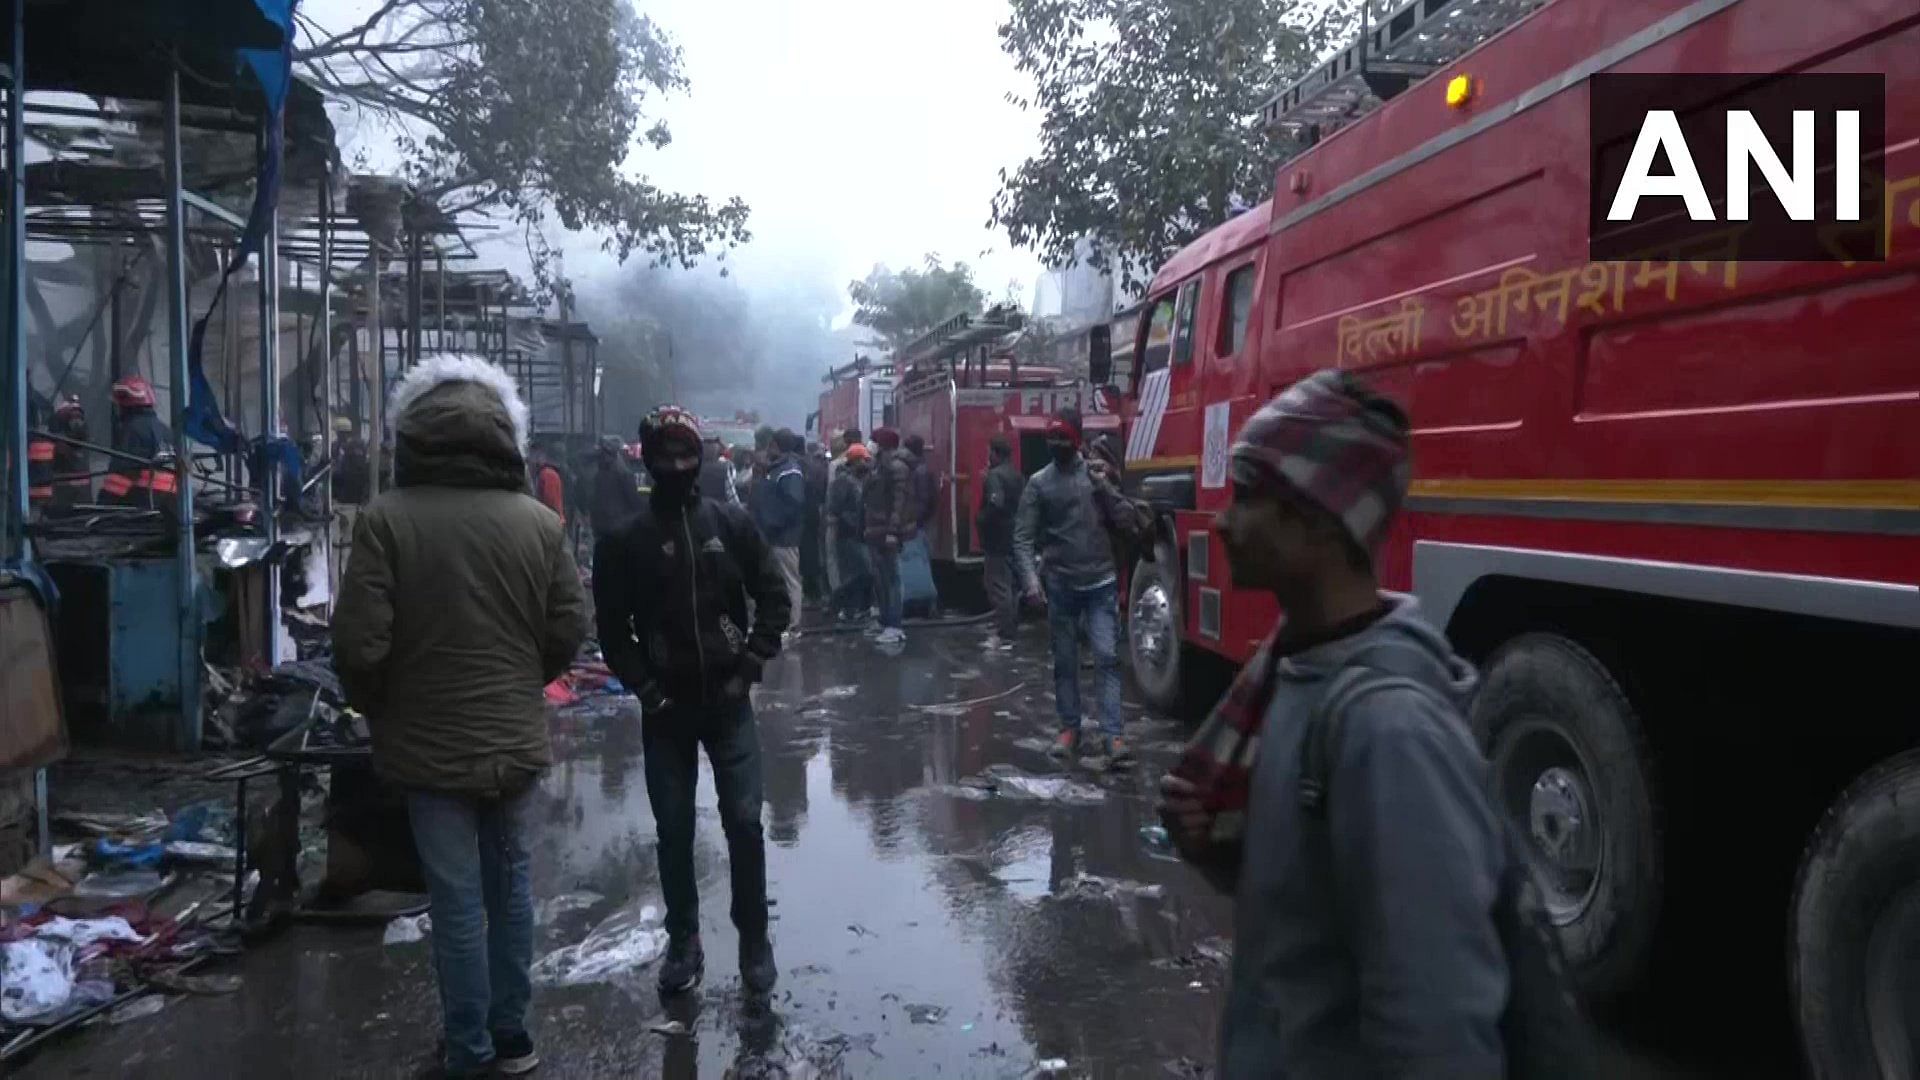 A major fire broke out at Lajpat Rai Market in Chandni Chowk. Credit: Twitter @aninews